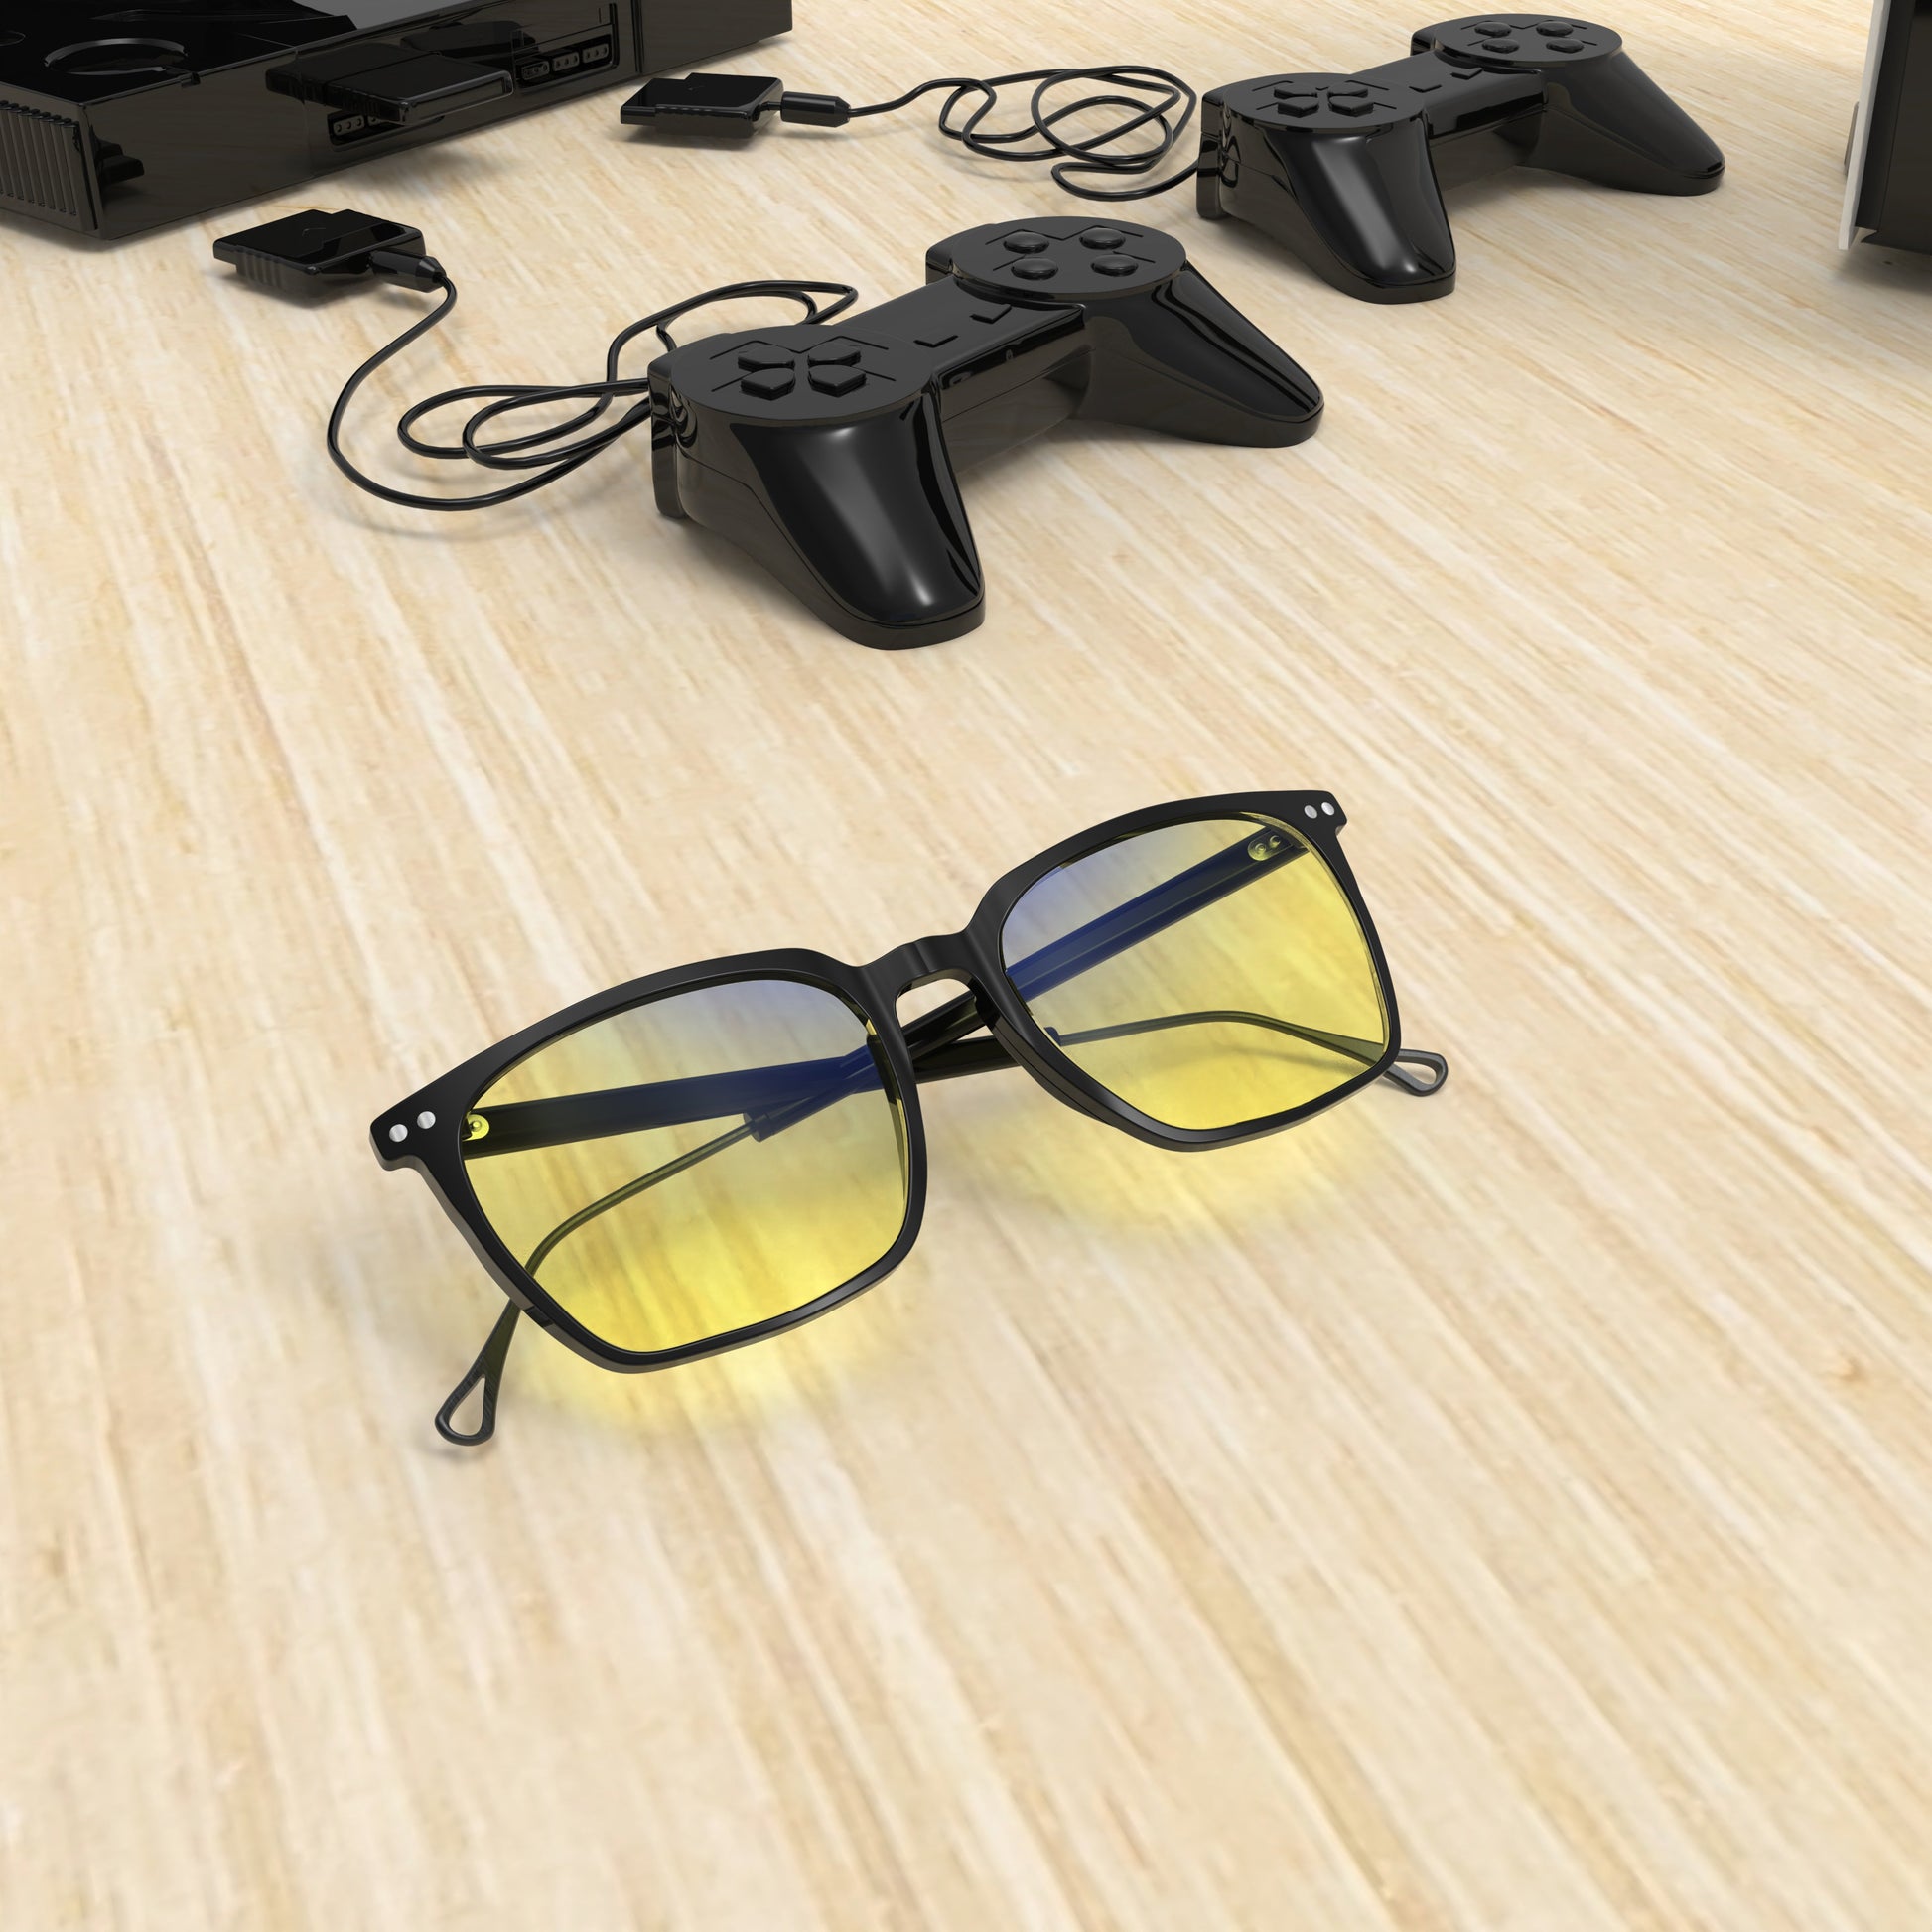 Sleepaxa Solstice Jet Black Gaming Glasses